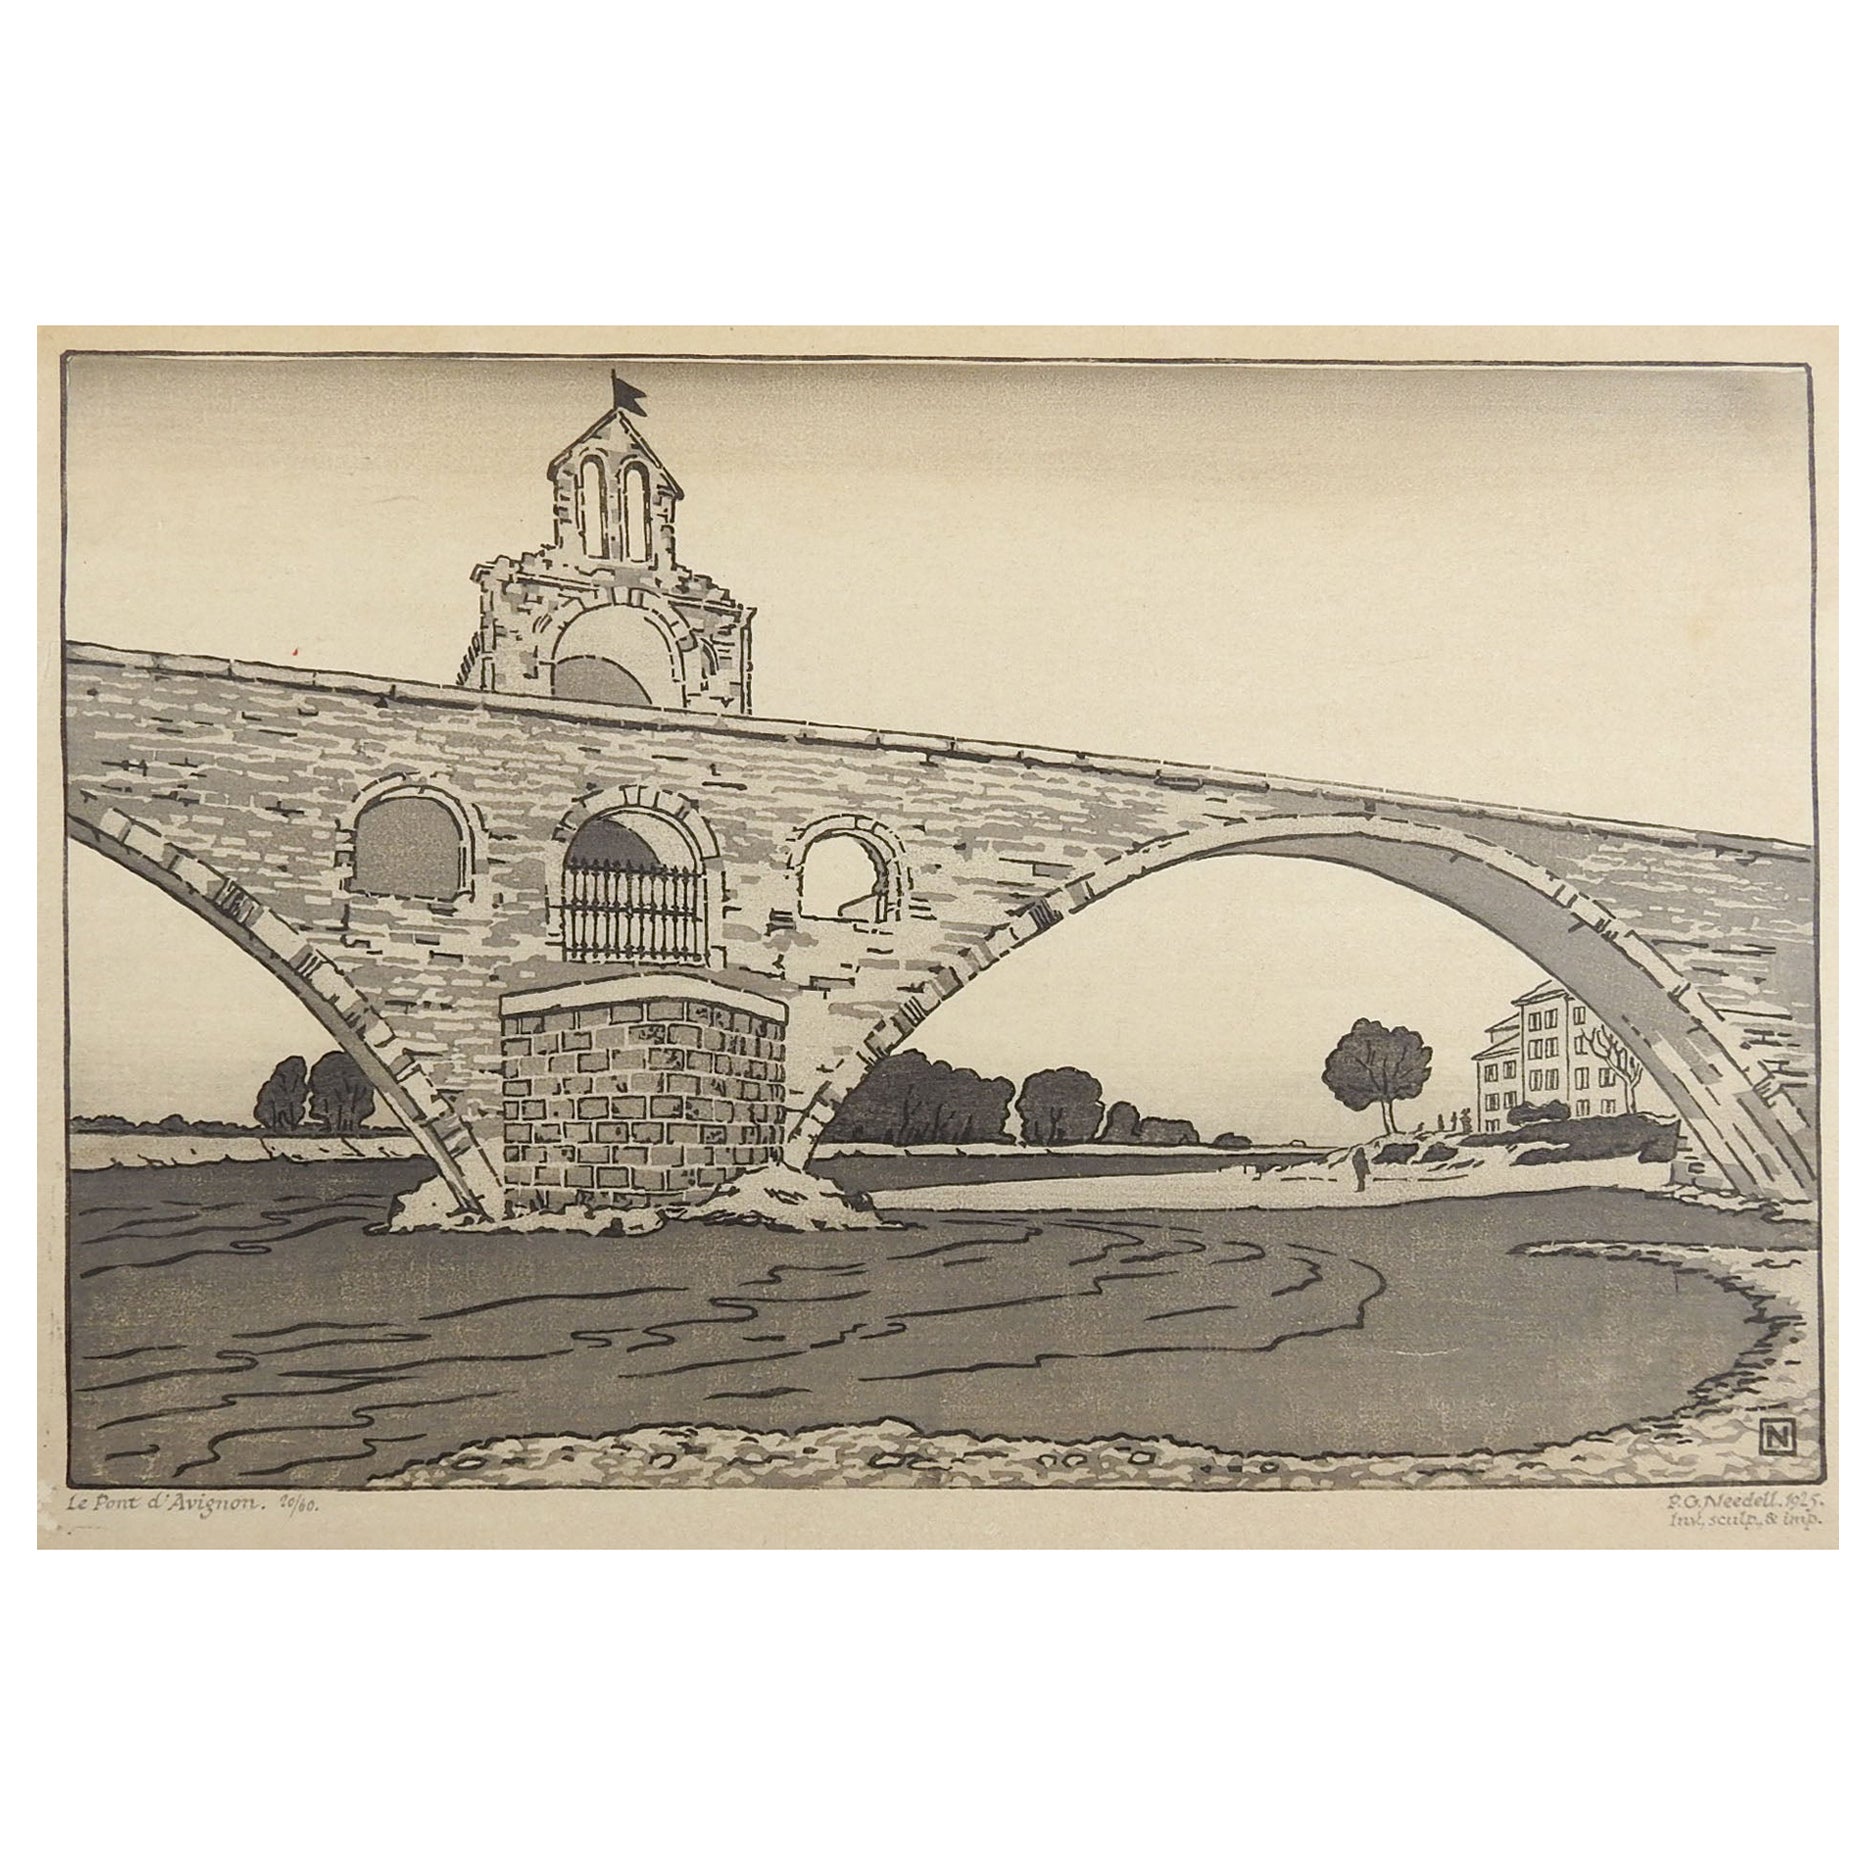 Le Pont d'Avignon, Holzschnitt mit Holzschnitt von Philip Needell, 1925